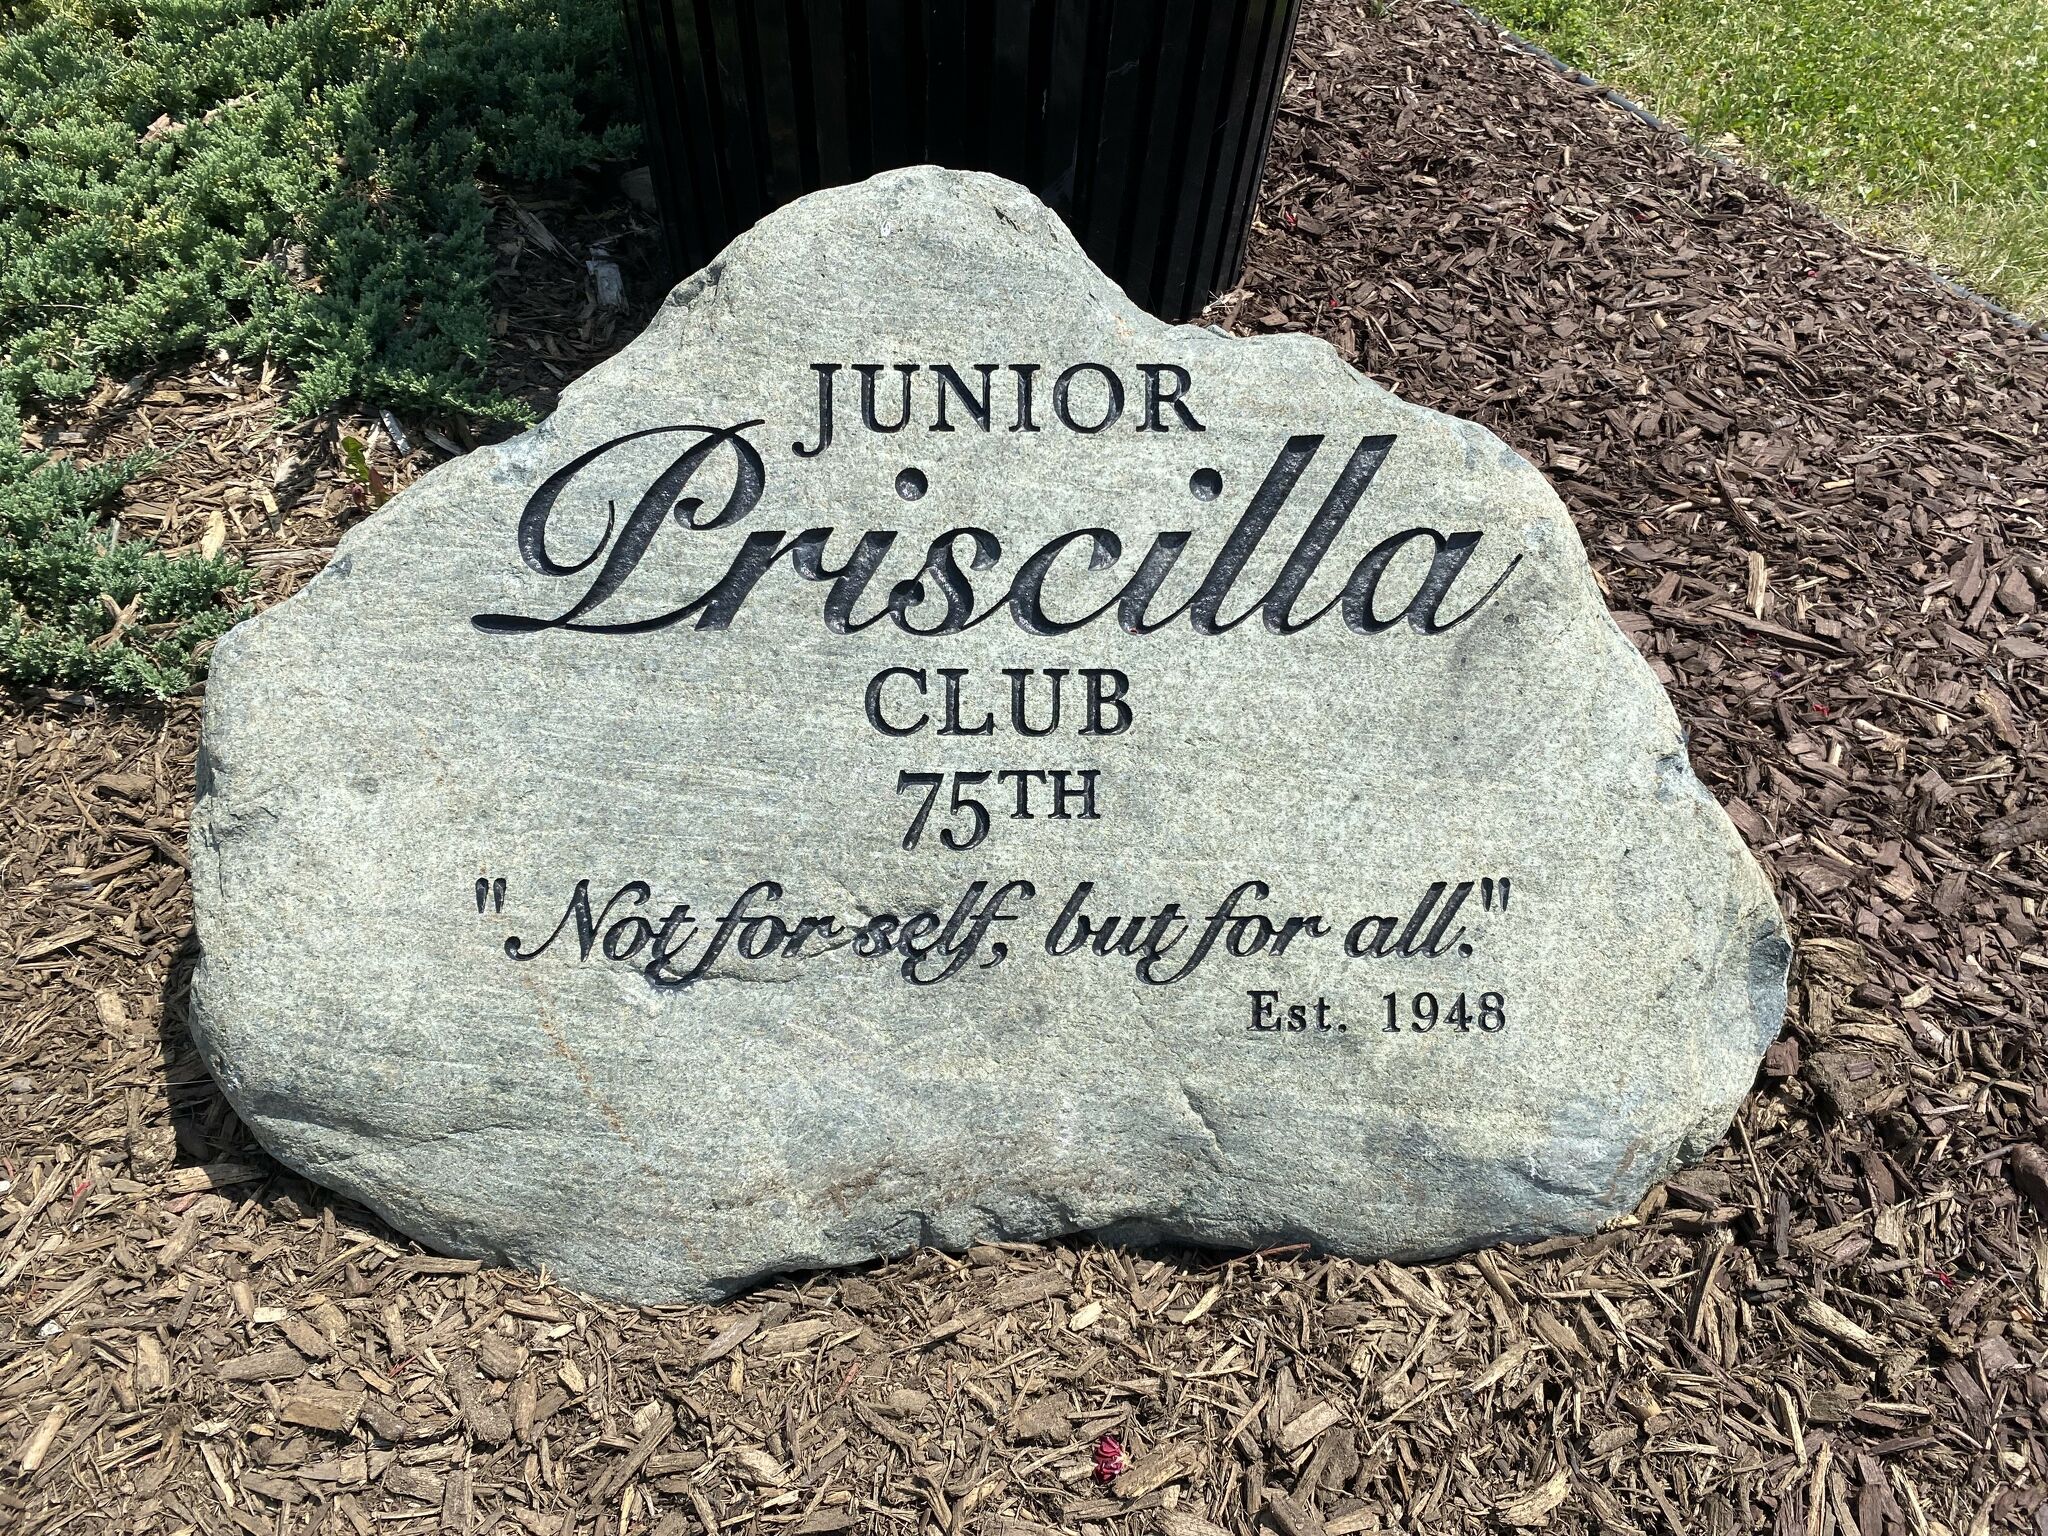 Port Austin Priscilla Club celebrates 75 years